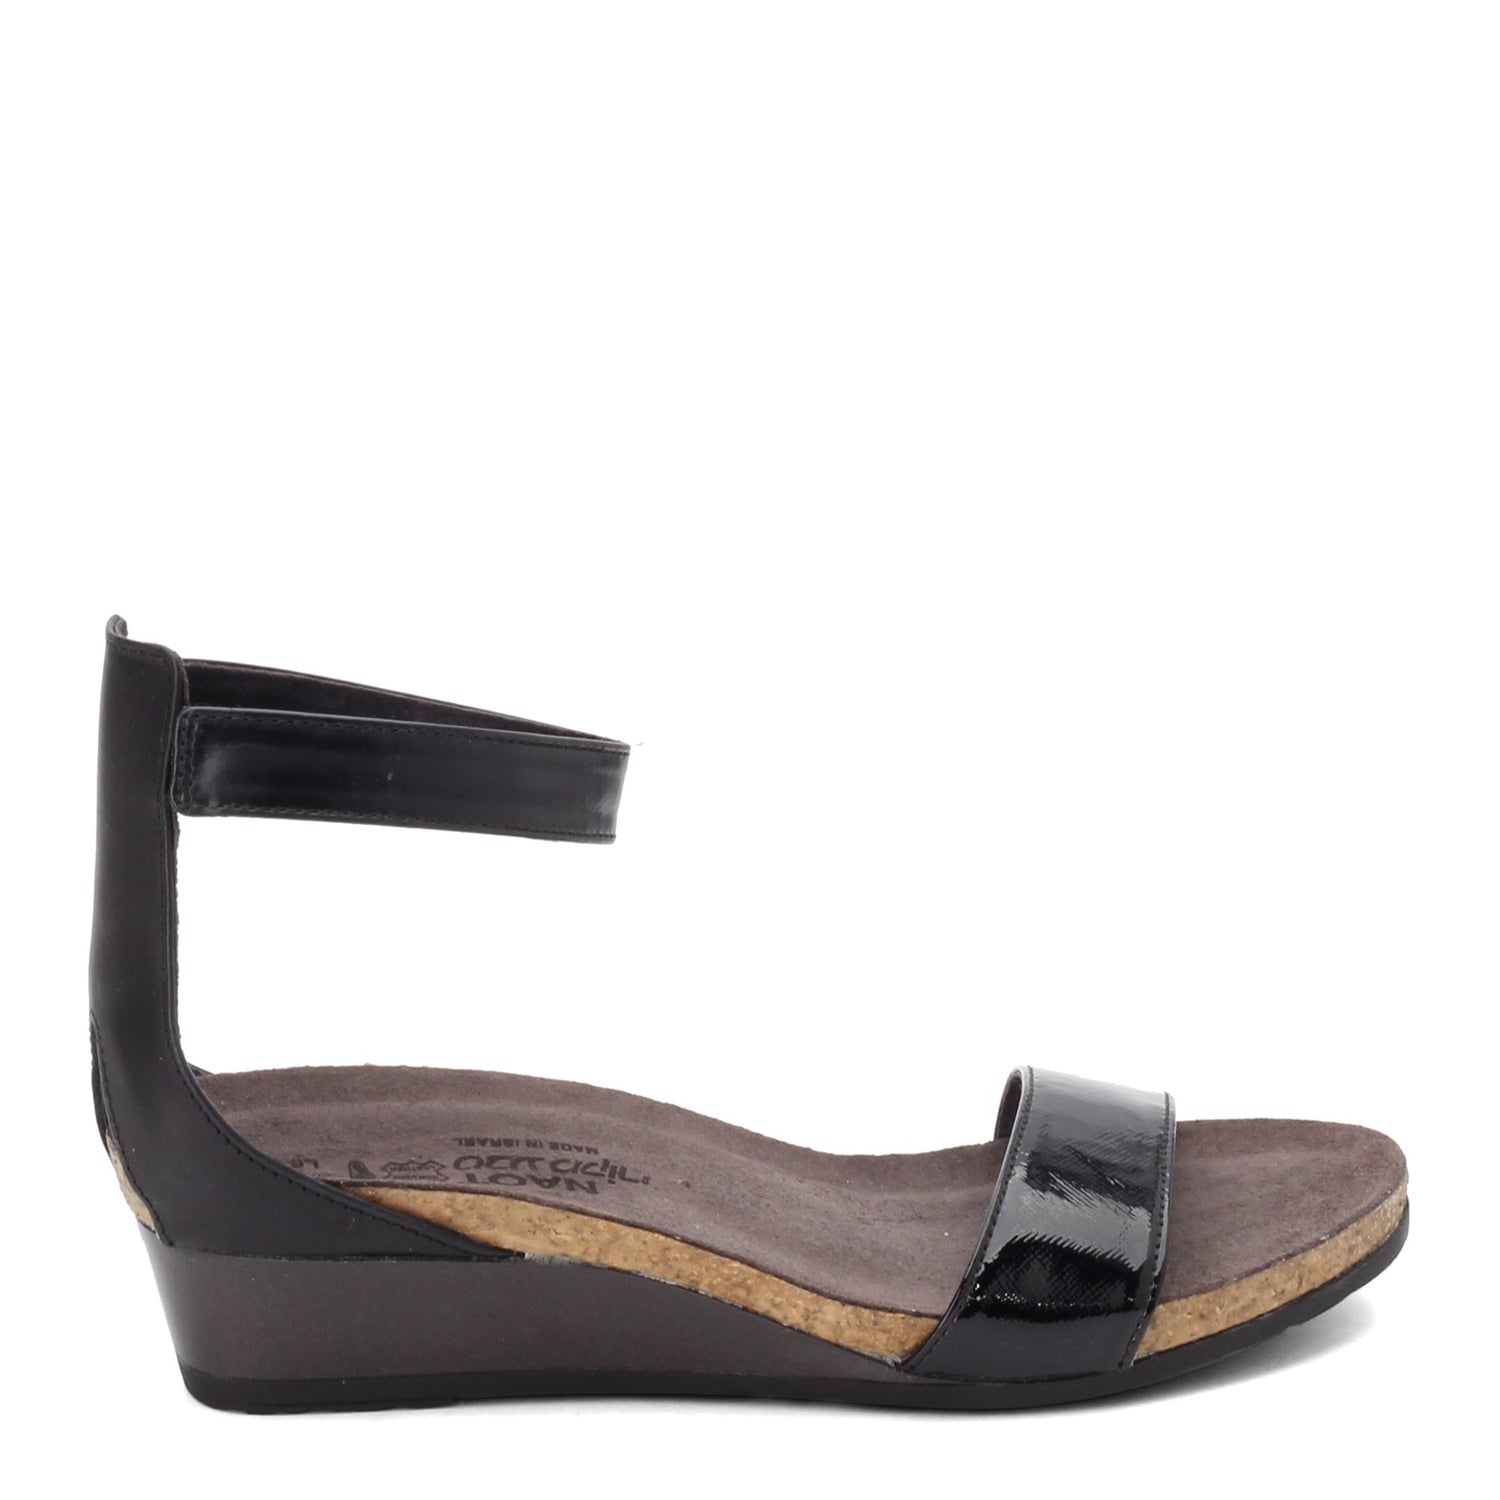 Peltz Shoes  Women's Naot Pixie Sandal BLACK 5016-NEW